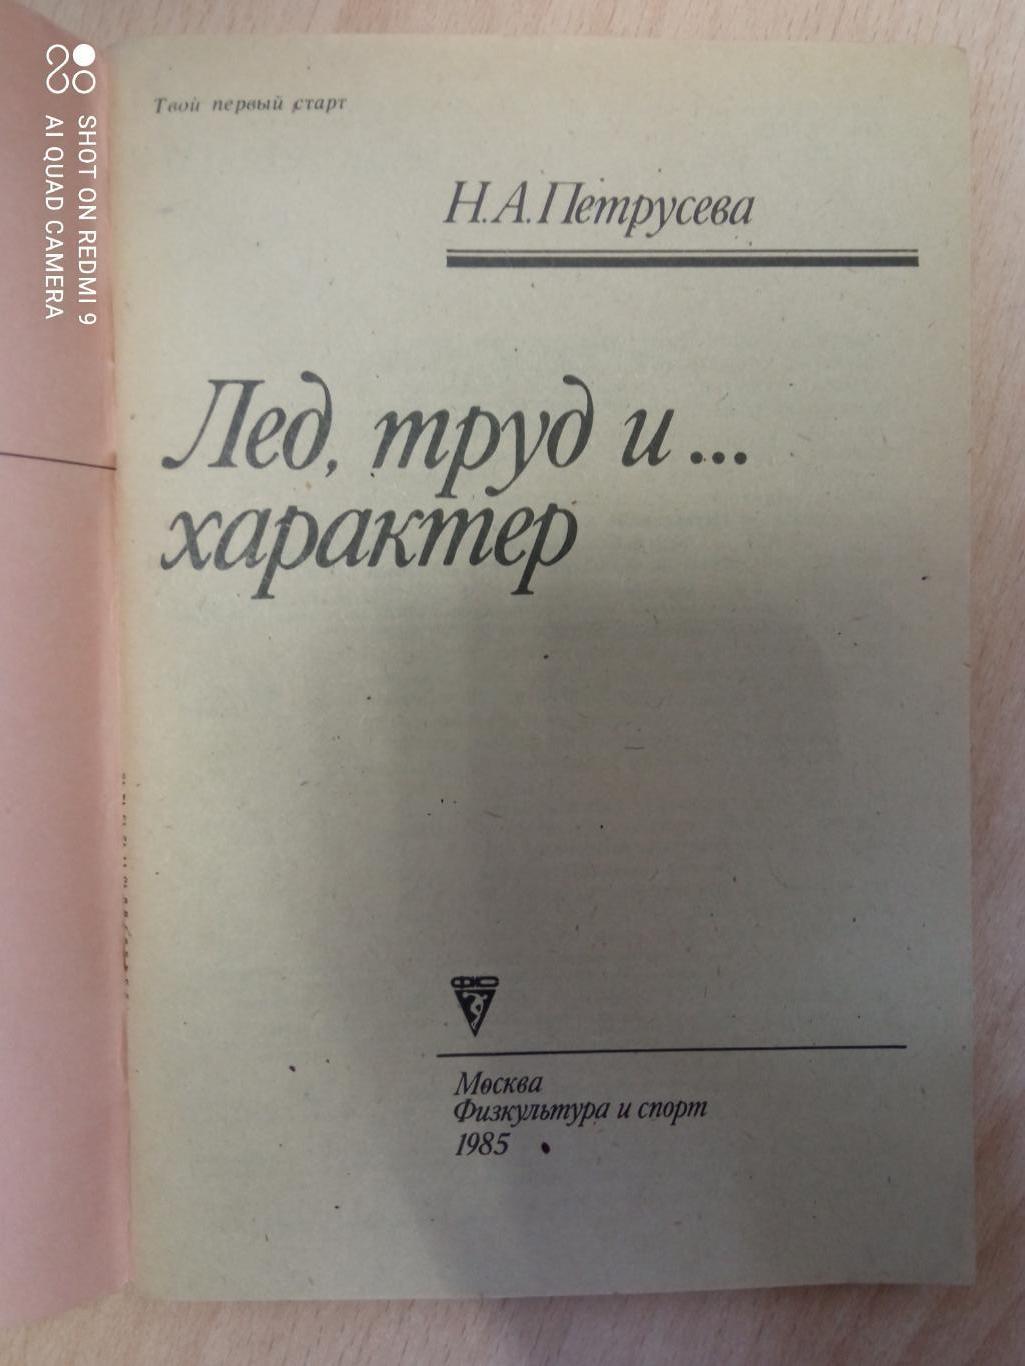 Н. Петрусева. Лед, труд и... характер (Коньки). 1985. 80 стр. 1